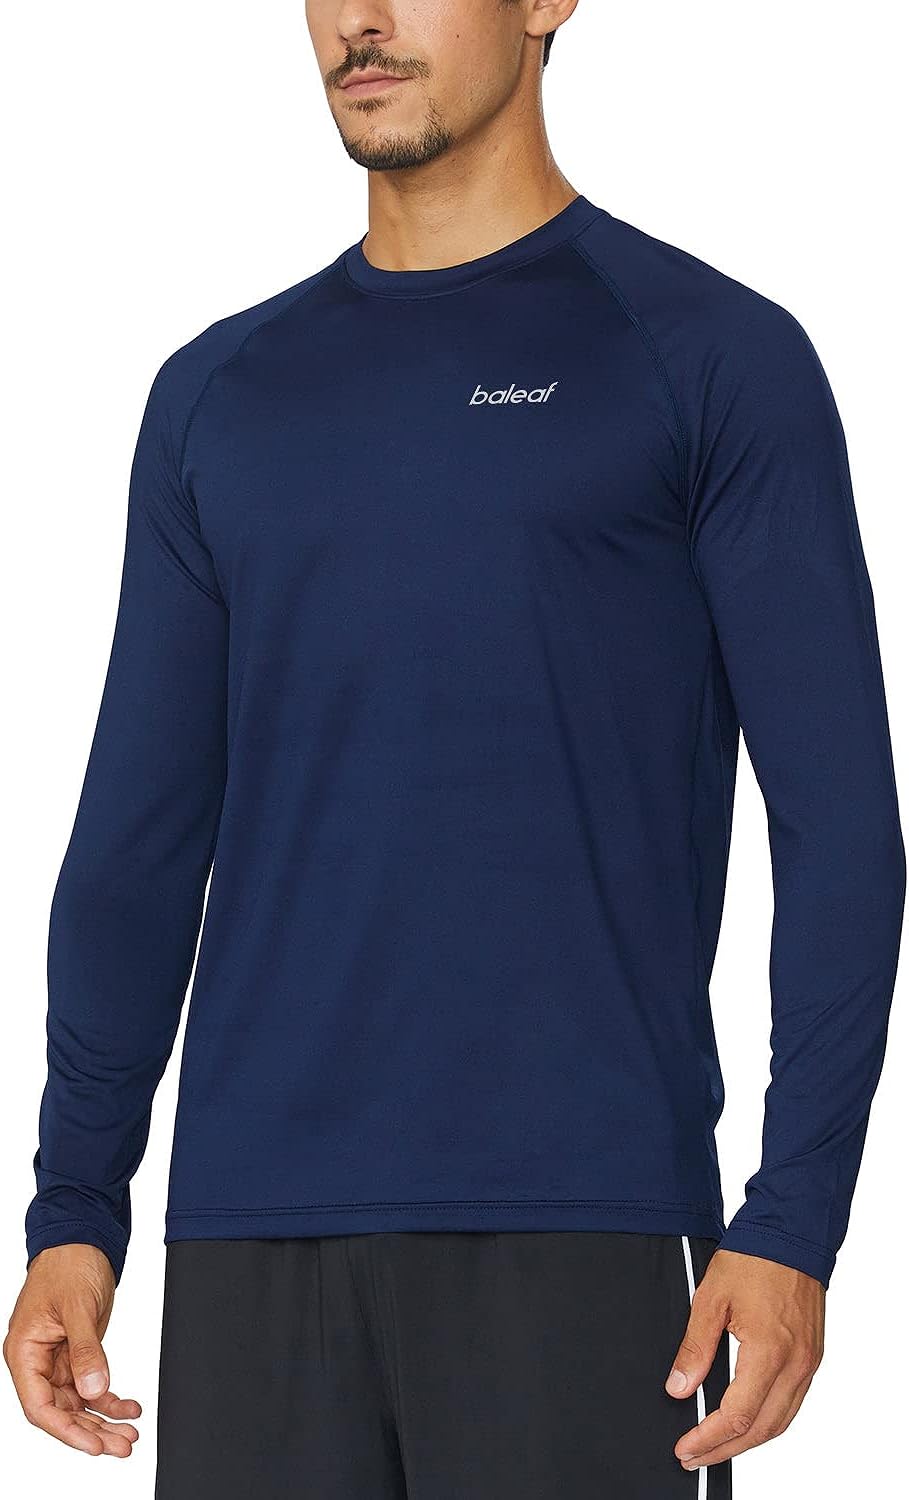 BALEAF Men's Long Sleeve Running Quick Dry Workout Shirts Athletic T-Shirts